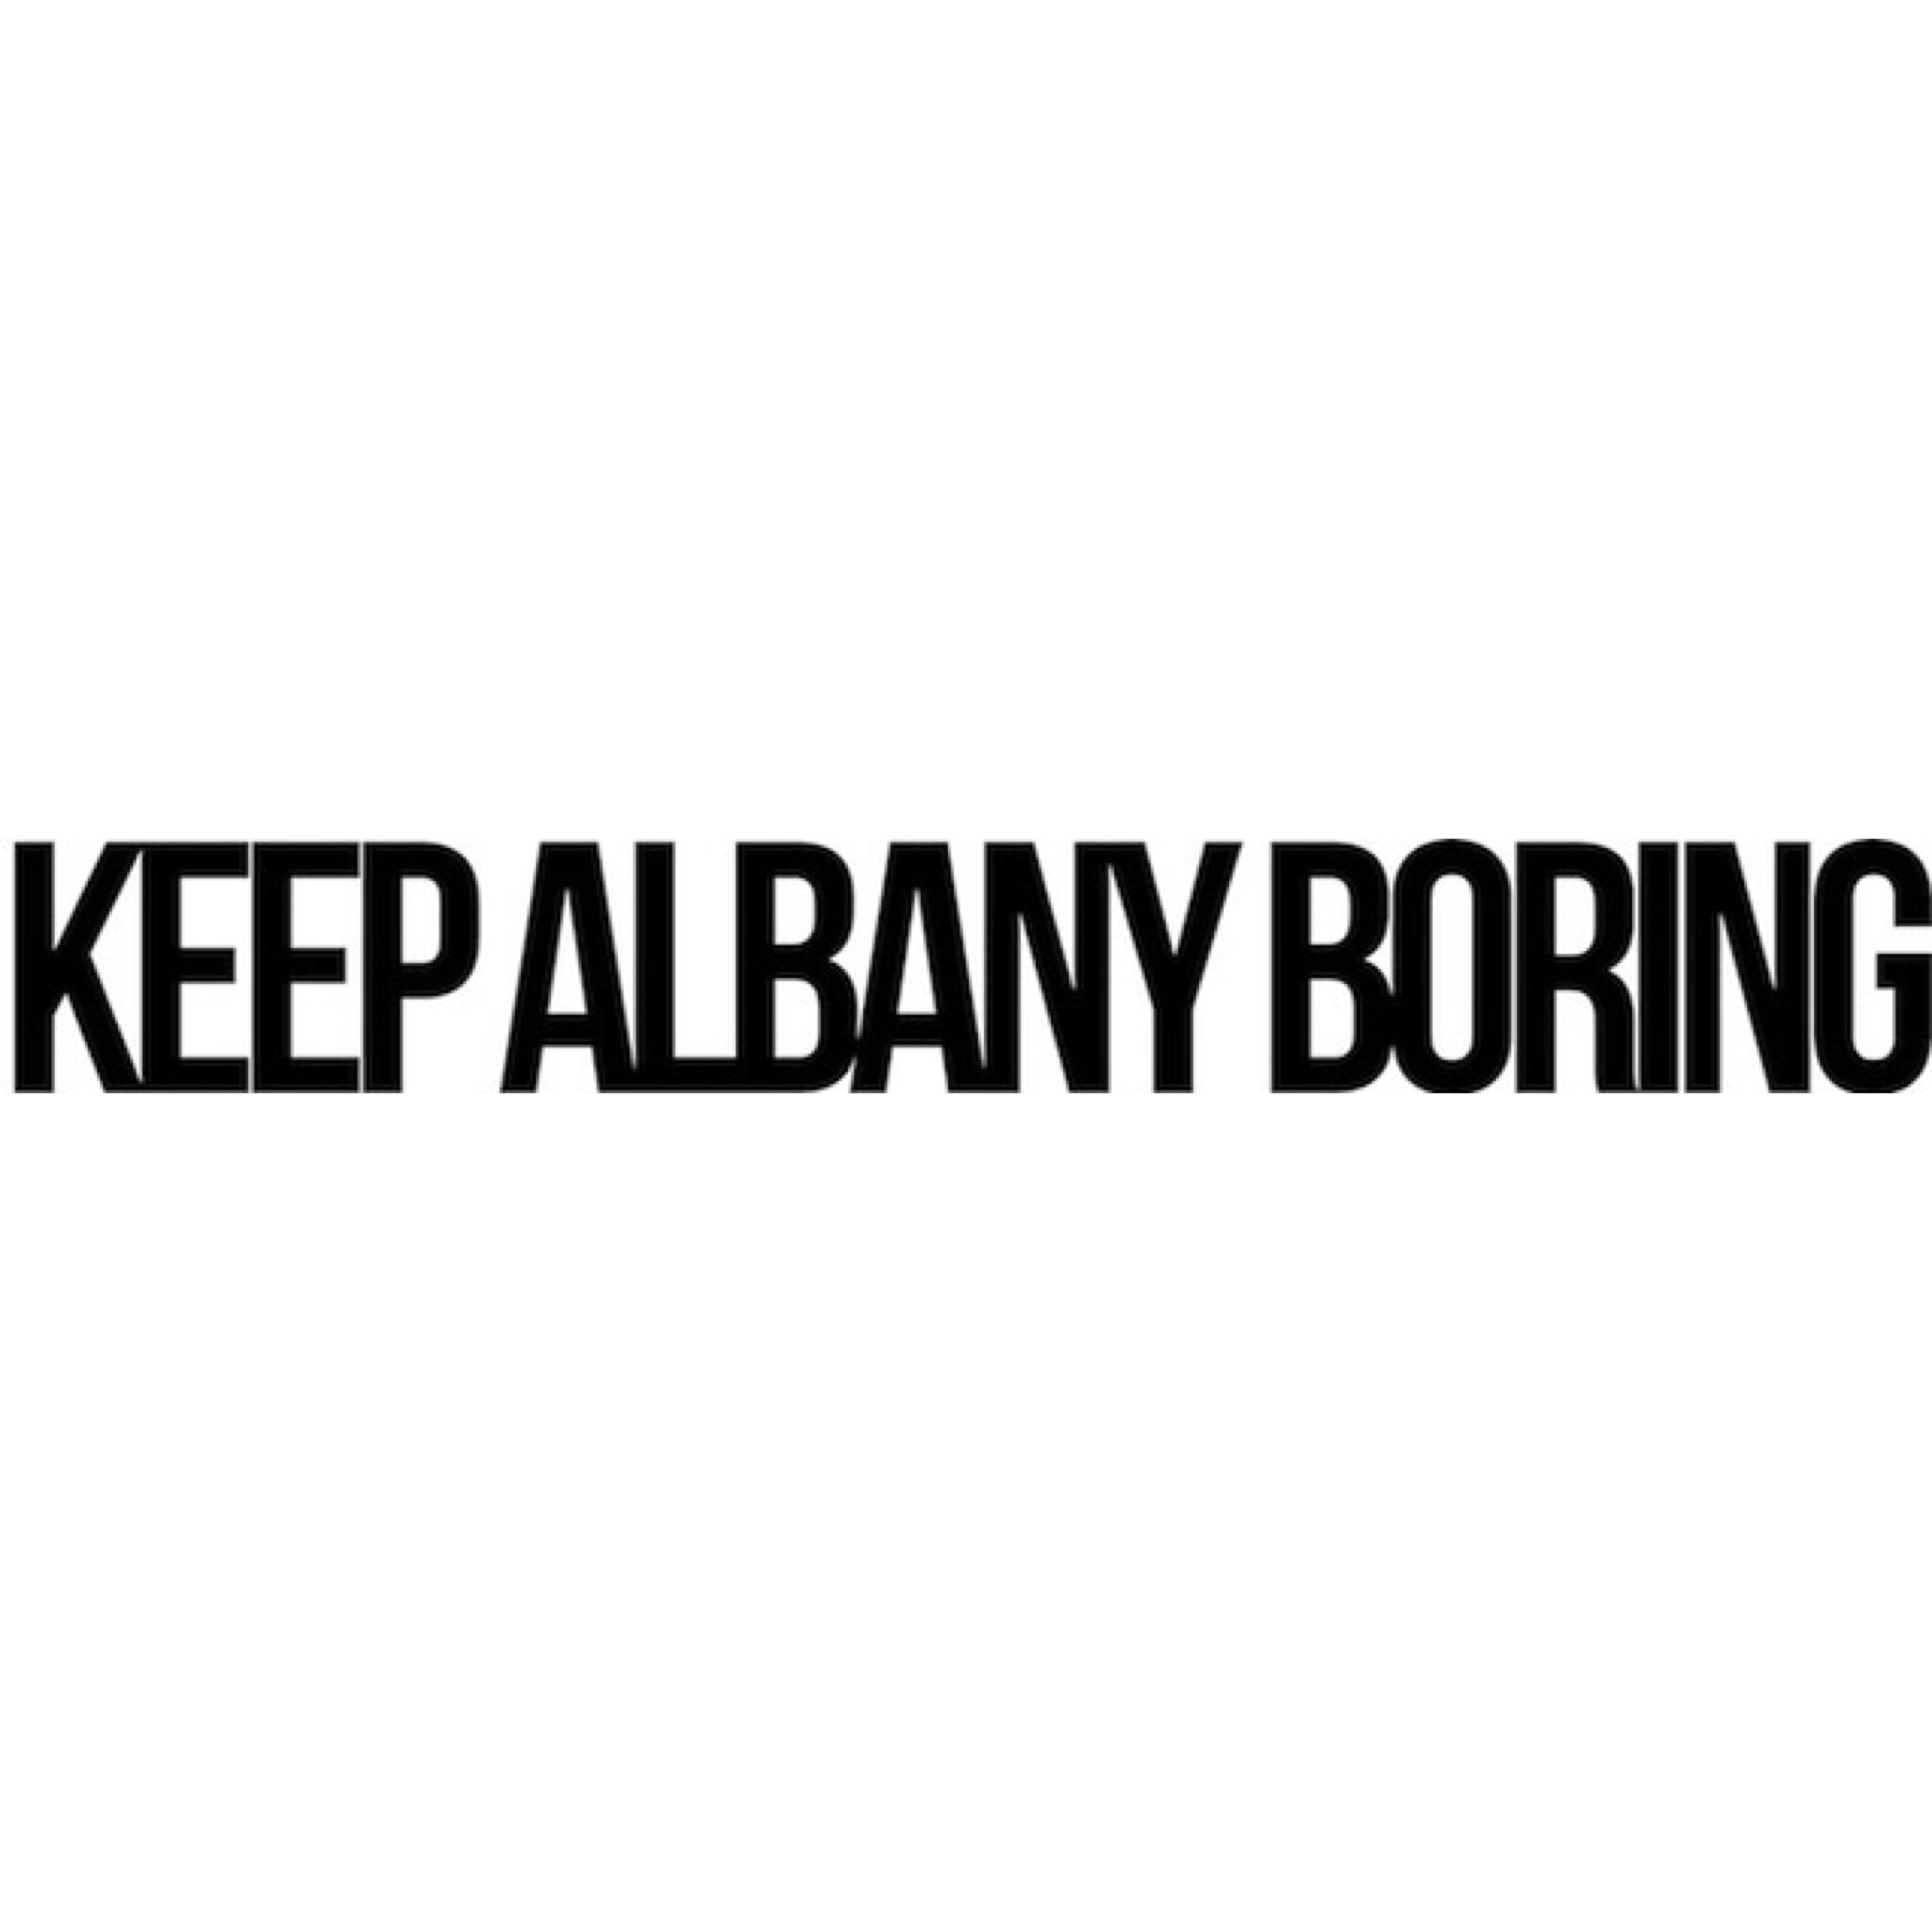 keep albany boring.JPG